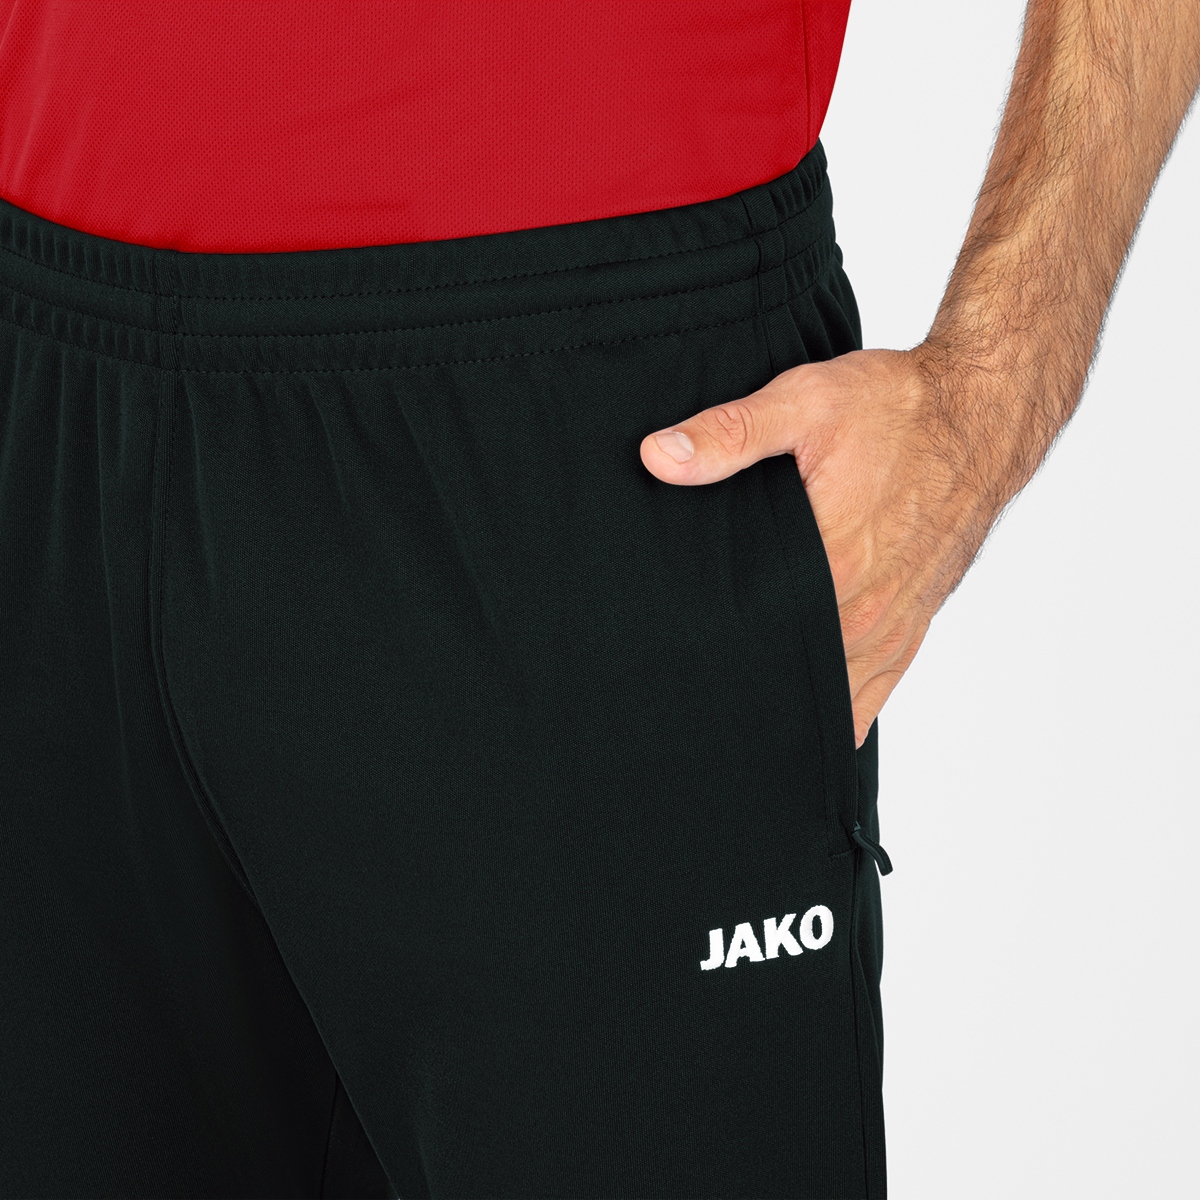 JAKO Trainingshose Classico Sporthose Jogginghose 9250 schwarz Gr S M L XL XXL 